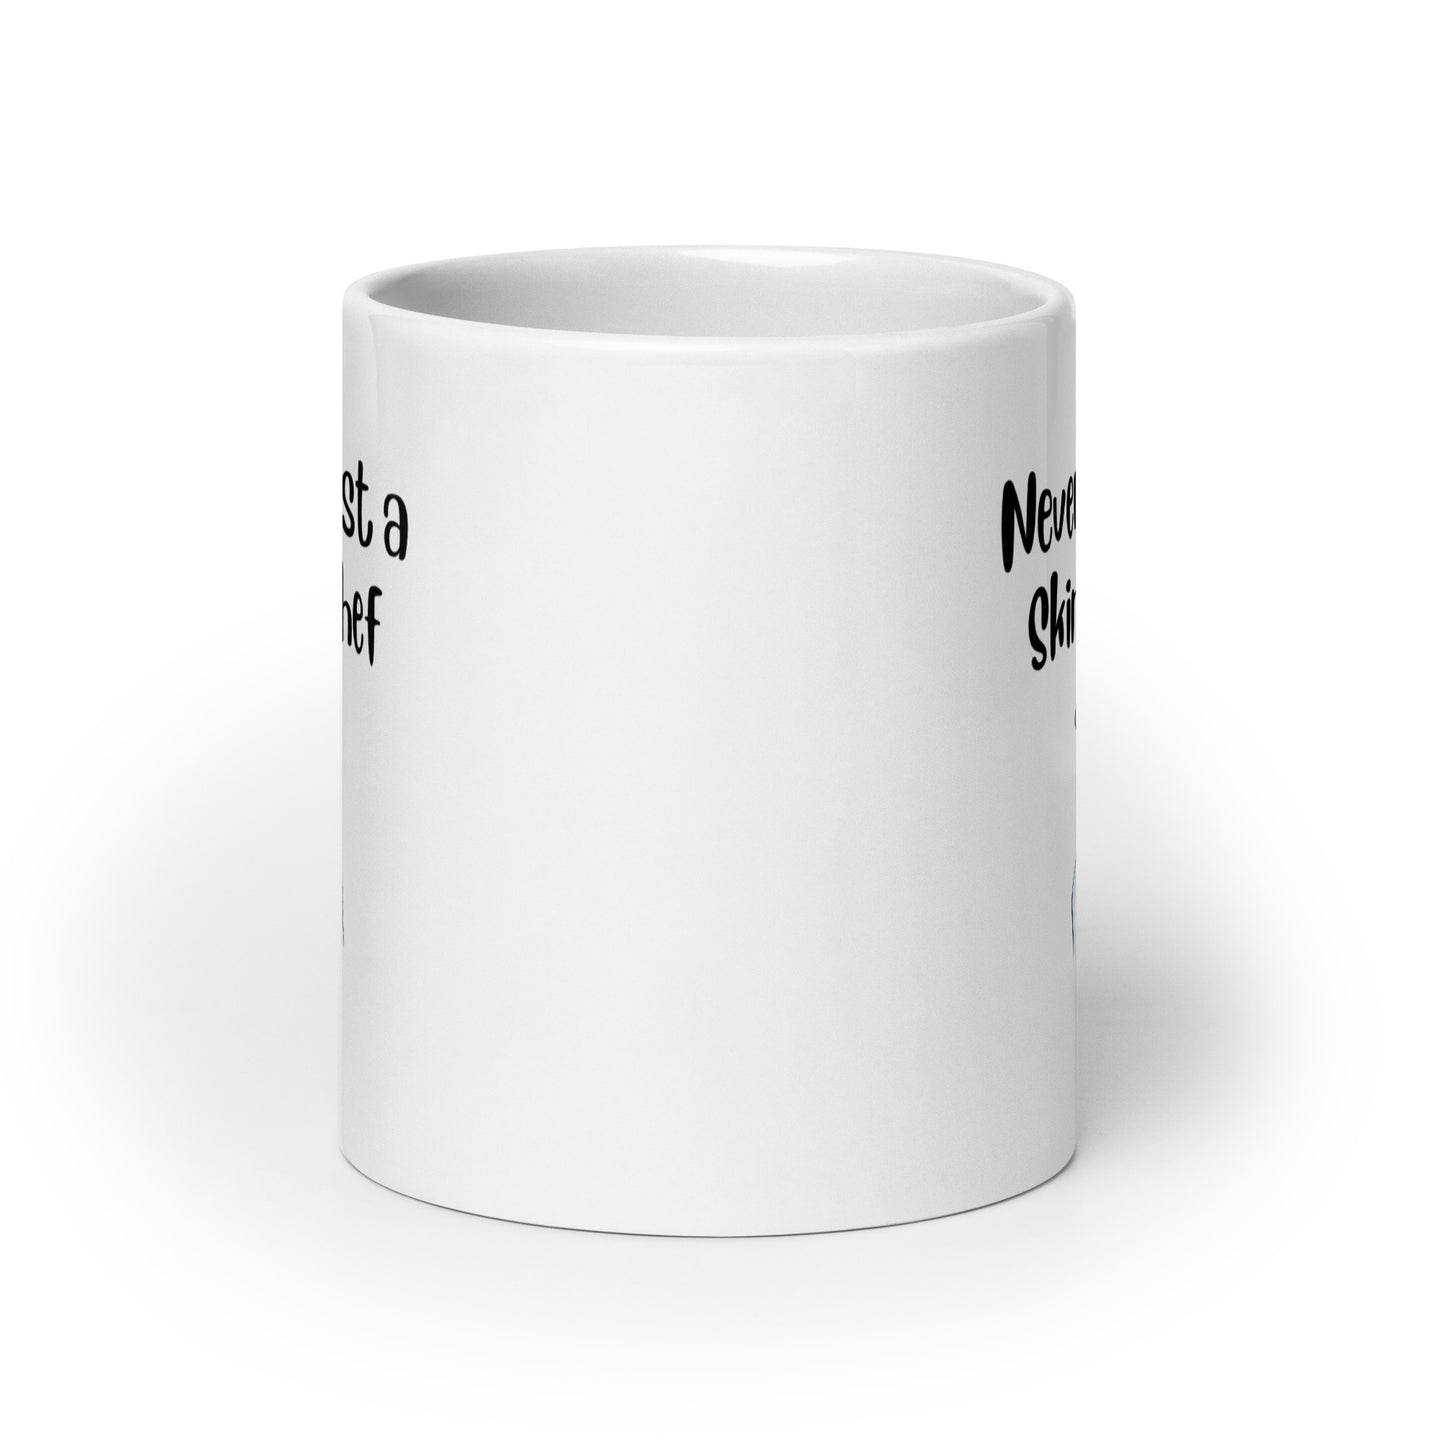 Never Trust a Skinny Chef White Ceramic Coffee Mug